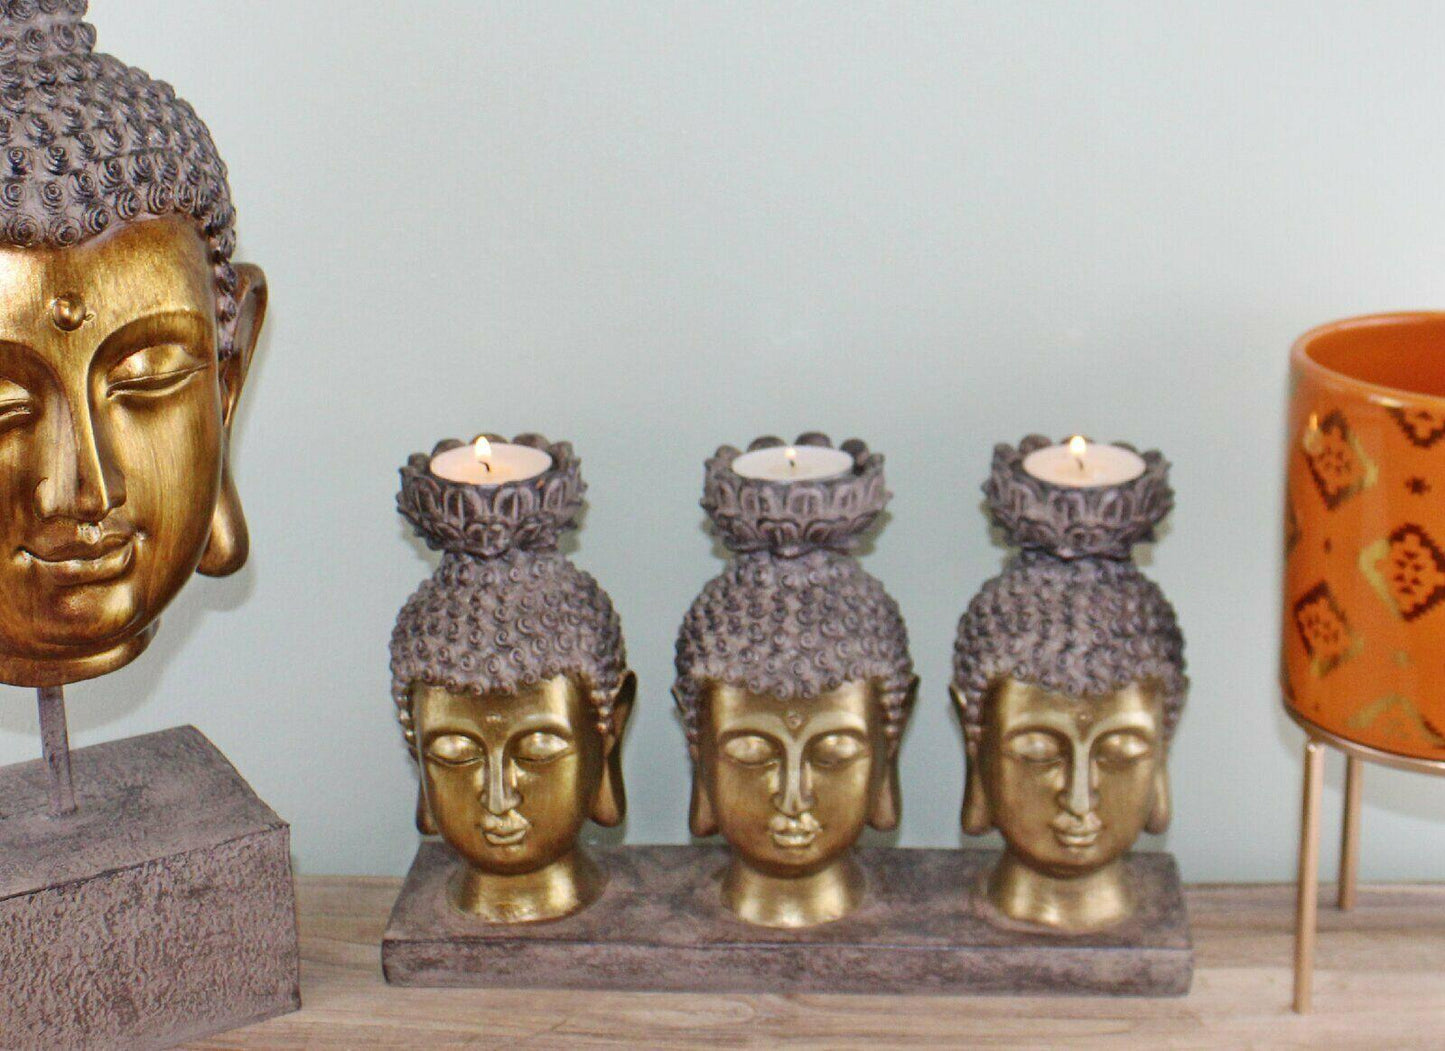 Triple Candle Tea Light Holder on Base, Thai Buddha Design - Home Inspired Gifts